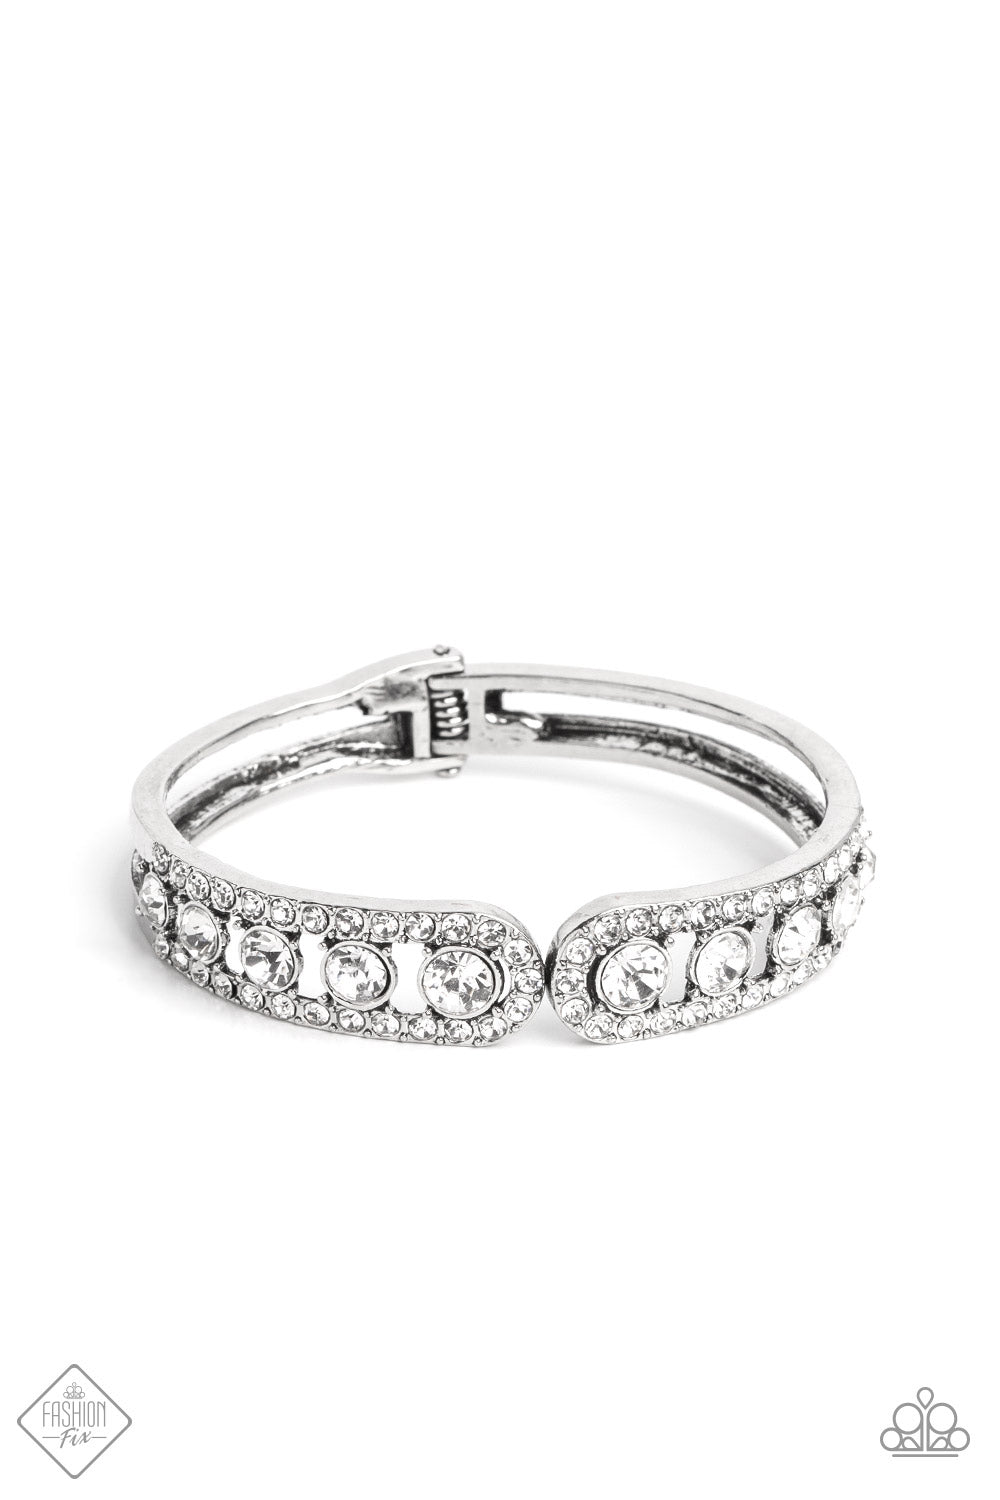 Spellbinding Splendor White Rhinestone Hinged Bracelet - Paparazzi Accessories- lightbox - CarasShop.com - $5 Jewelry by Cara Jewels